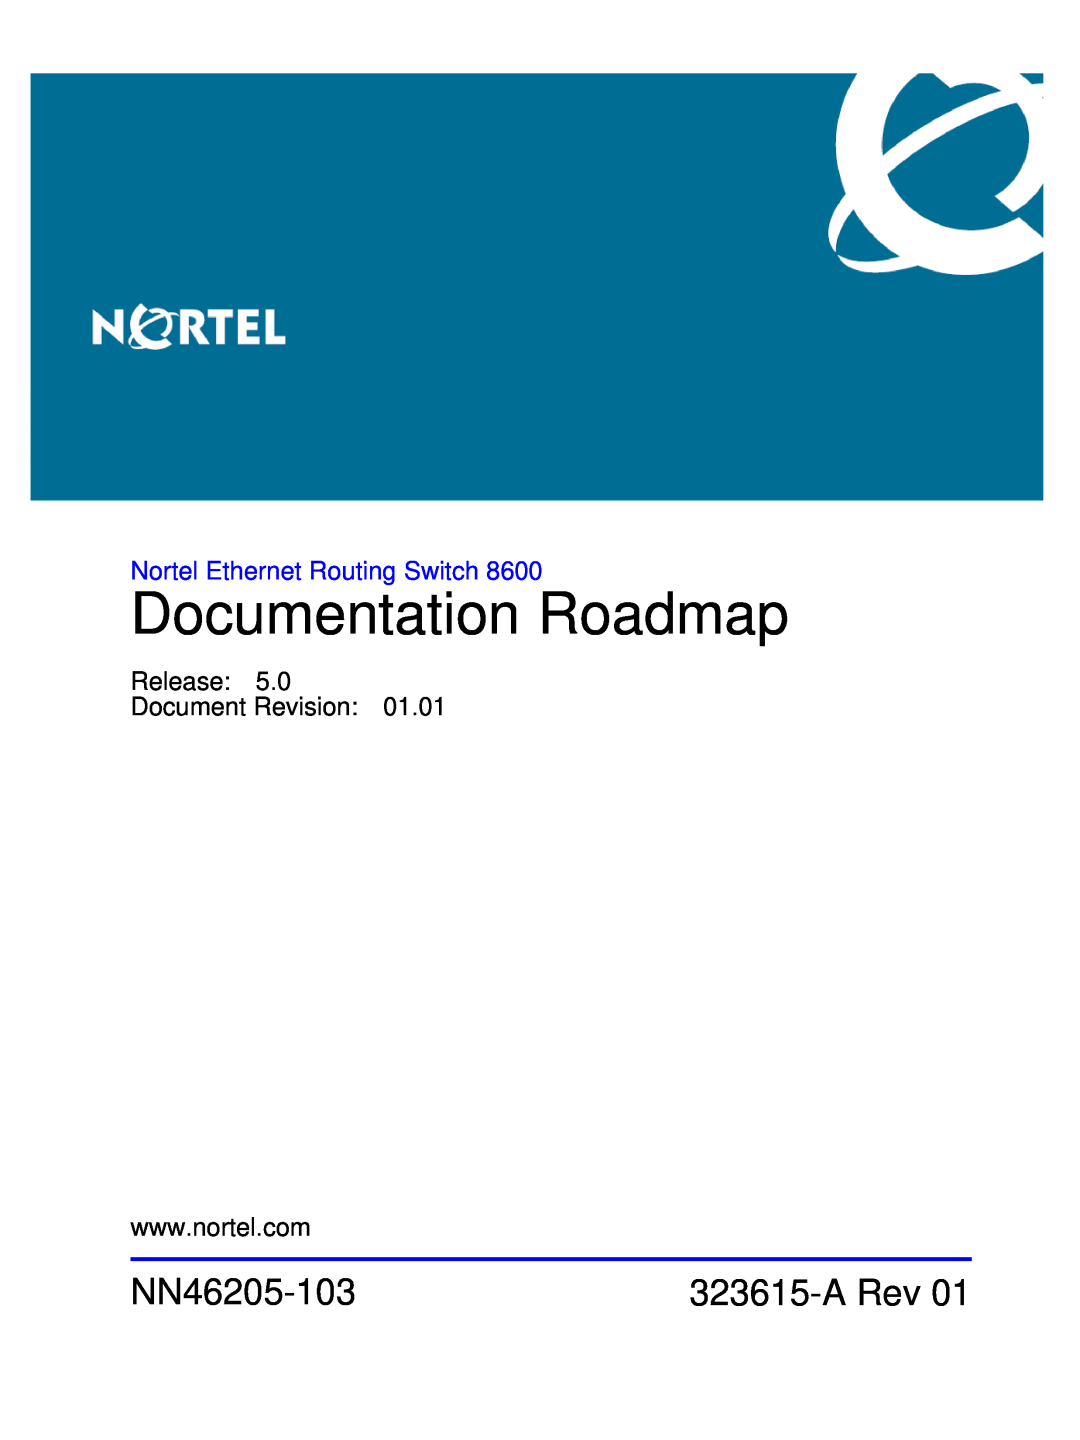 Nortel Networks 8600 manual Documentation Roadmap, NN46205-103, A Rev, Nortel Ethernet Routing Switch 